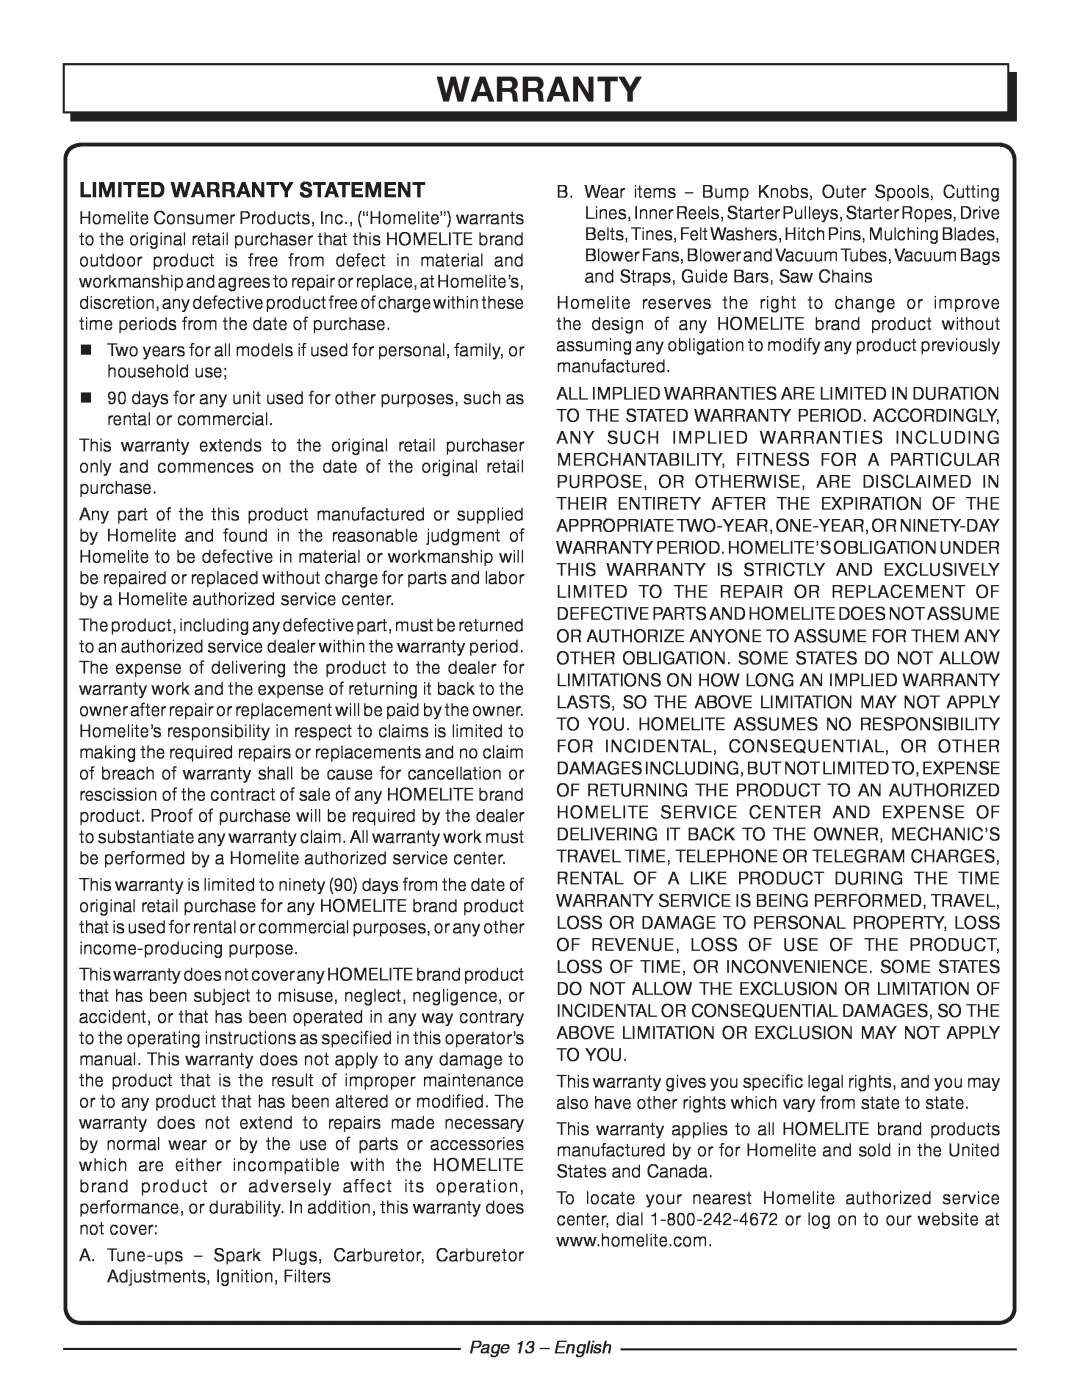 Homelite UT42120 manuel dutilisation Limited Warranty Statement, Page 13 - English 